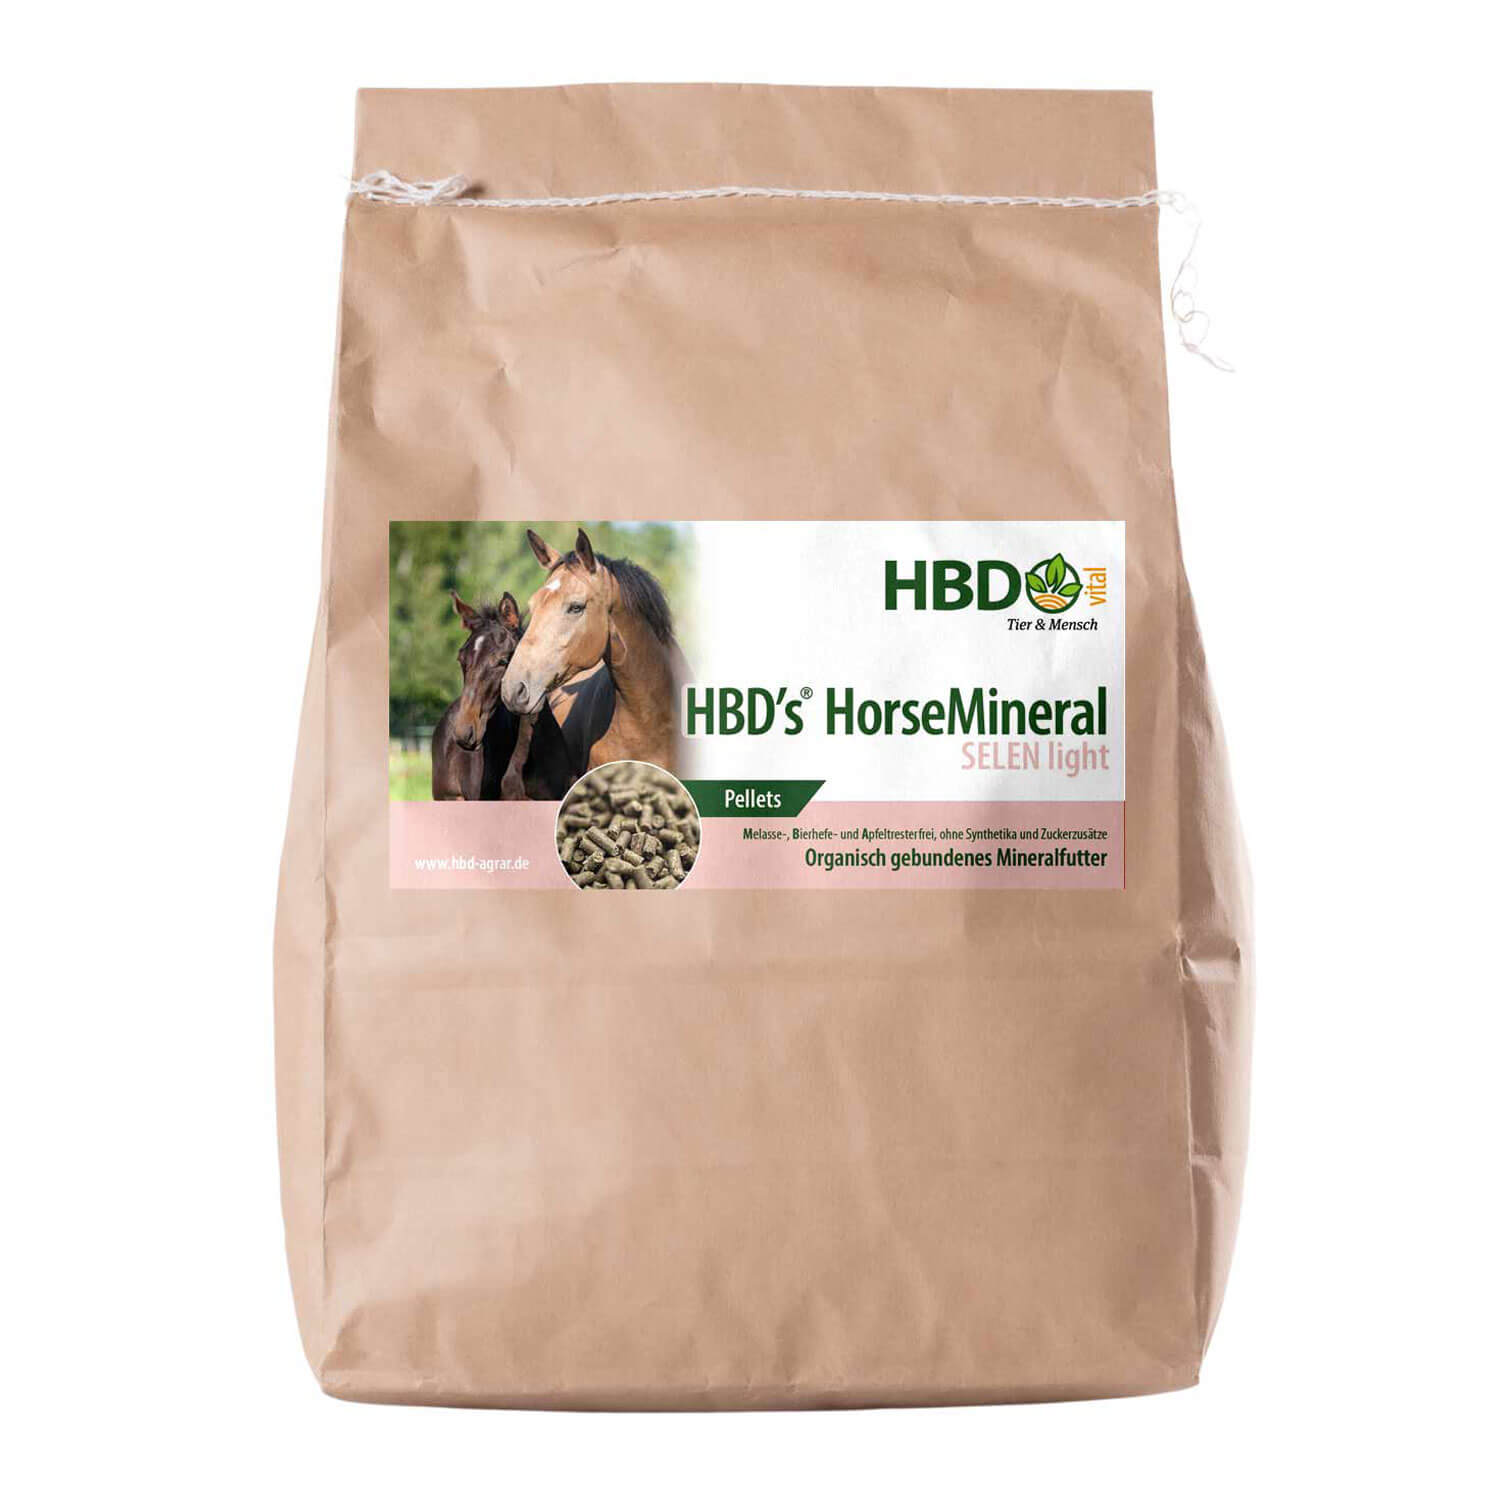 HBD-Agrar - HBD's® HorseMineral SELEN light - Mineralfutter mit reduziertem Selengehalt